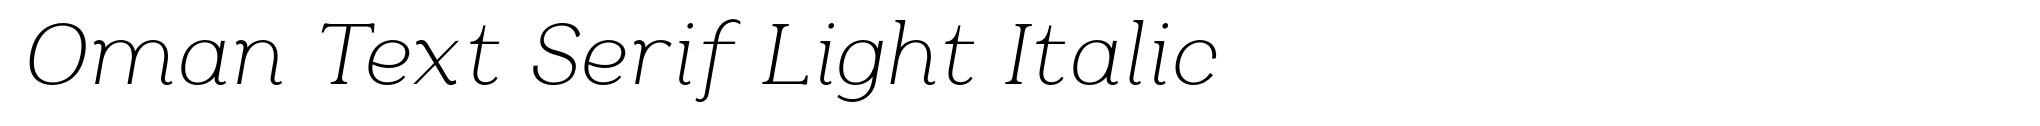 Oman Text Serif Light Italic image